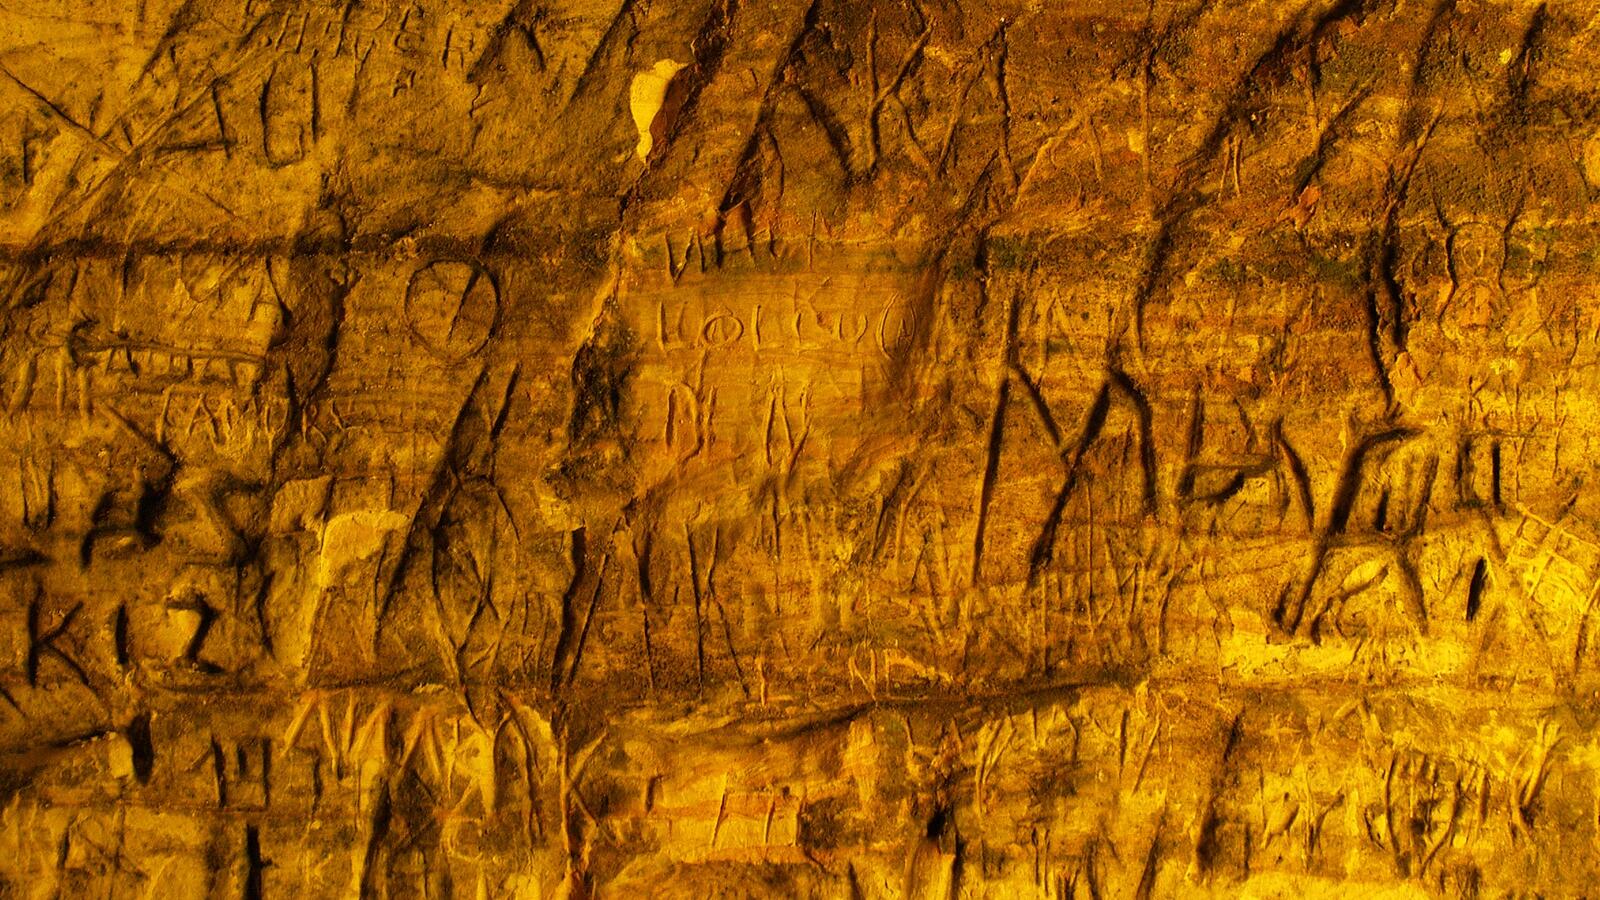 Wallpapers rock inscriptions many on the desktop